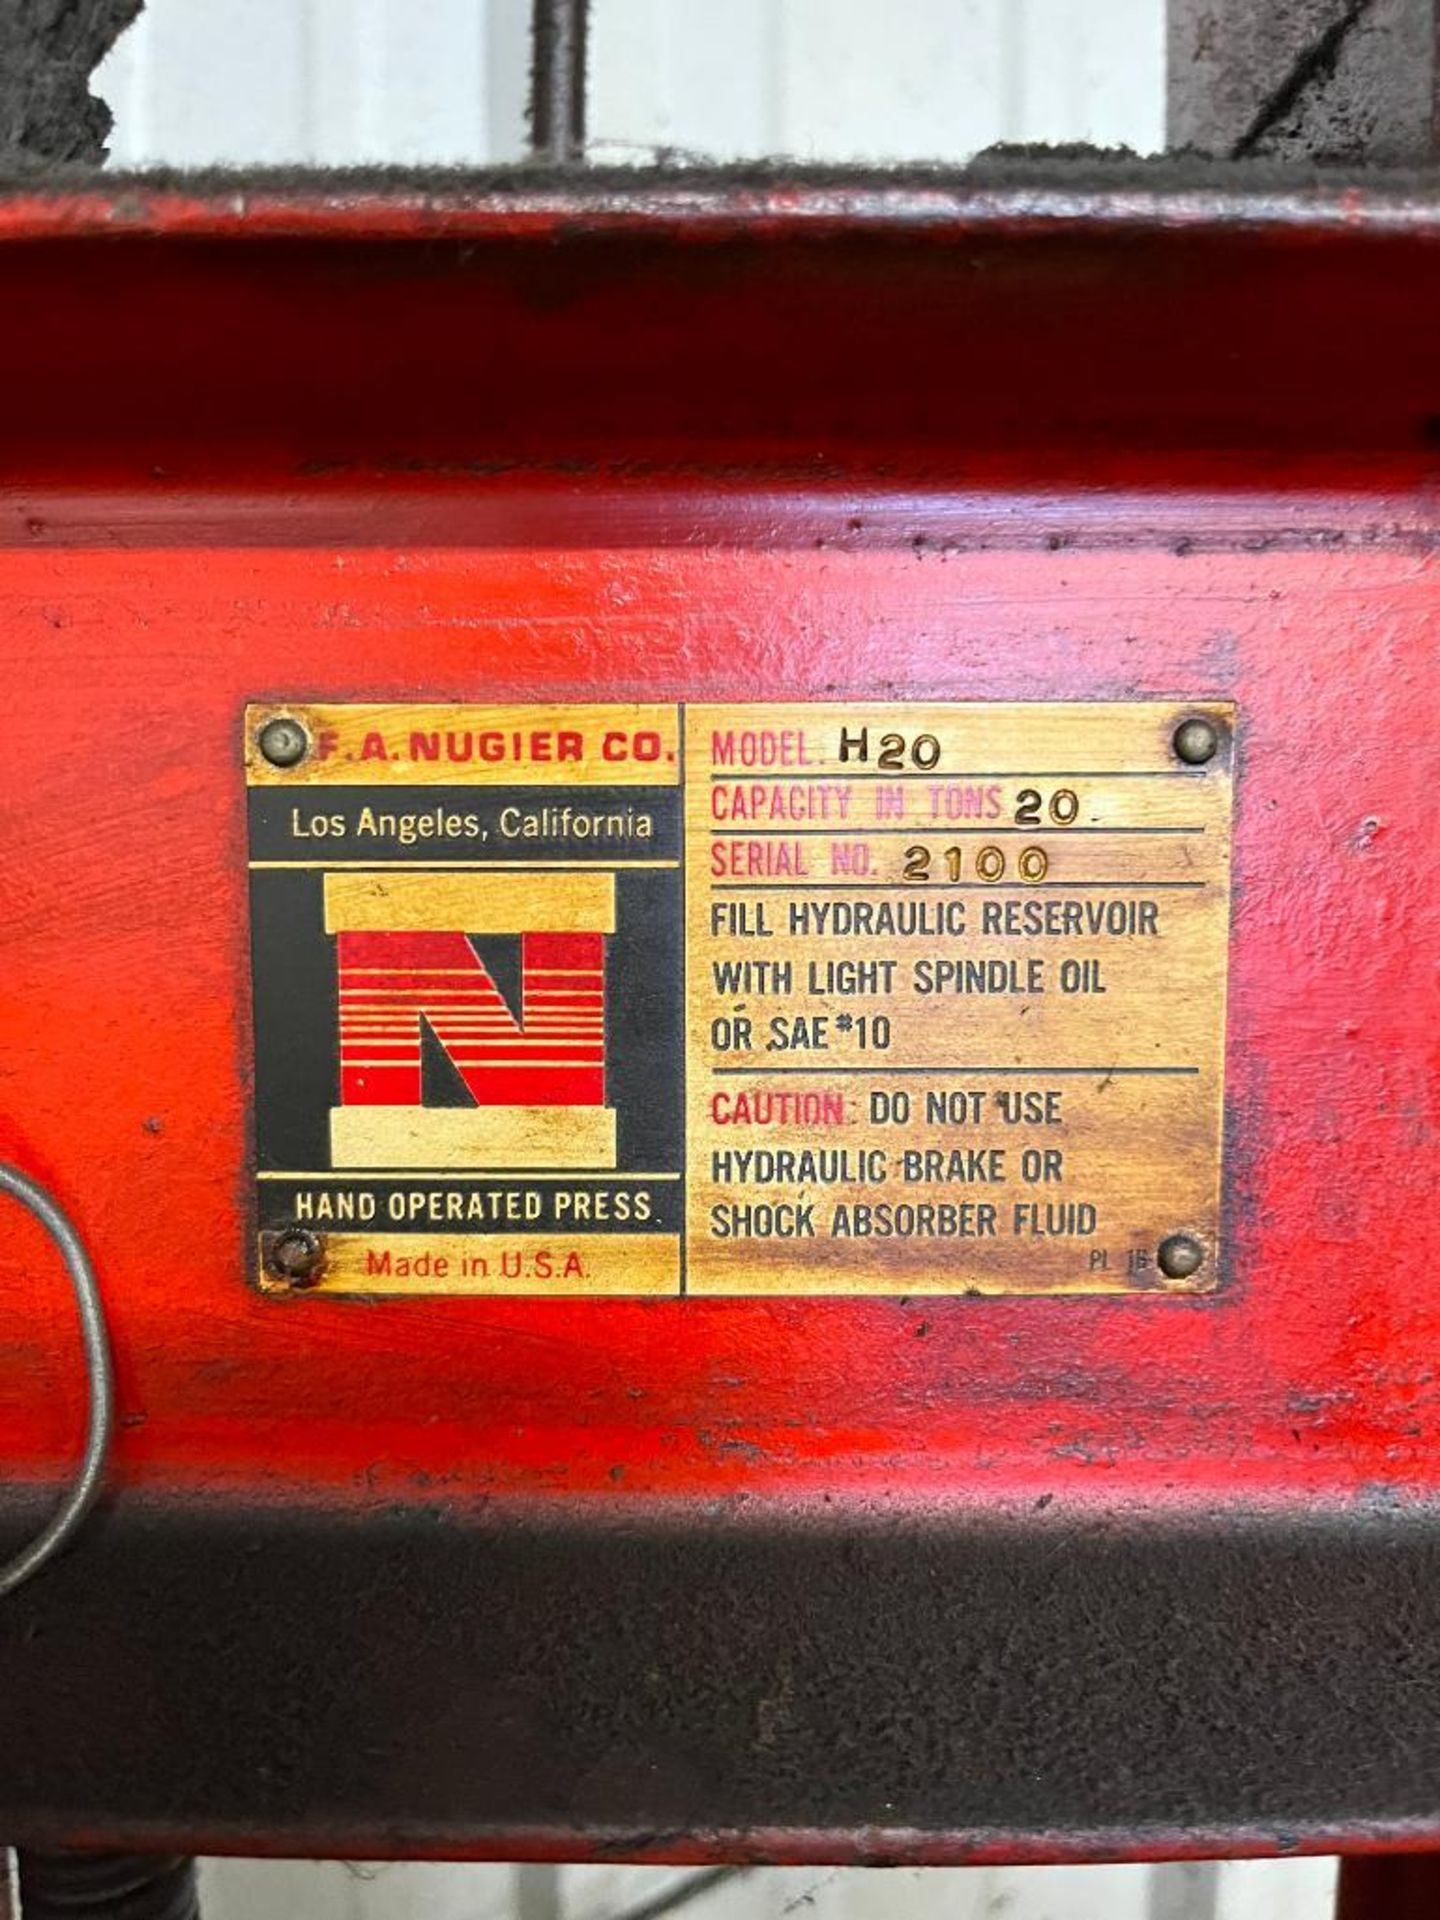 Nugier h-frame shop press, 20-ton cap., model h20, s/n 2100 - Image 2 of 2